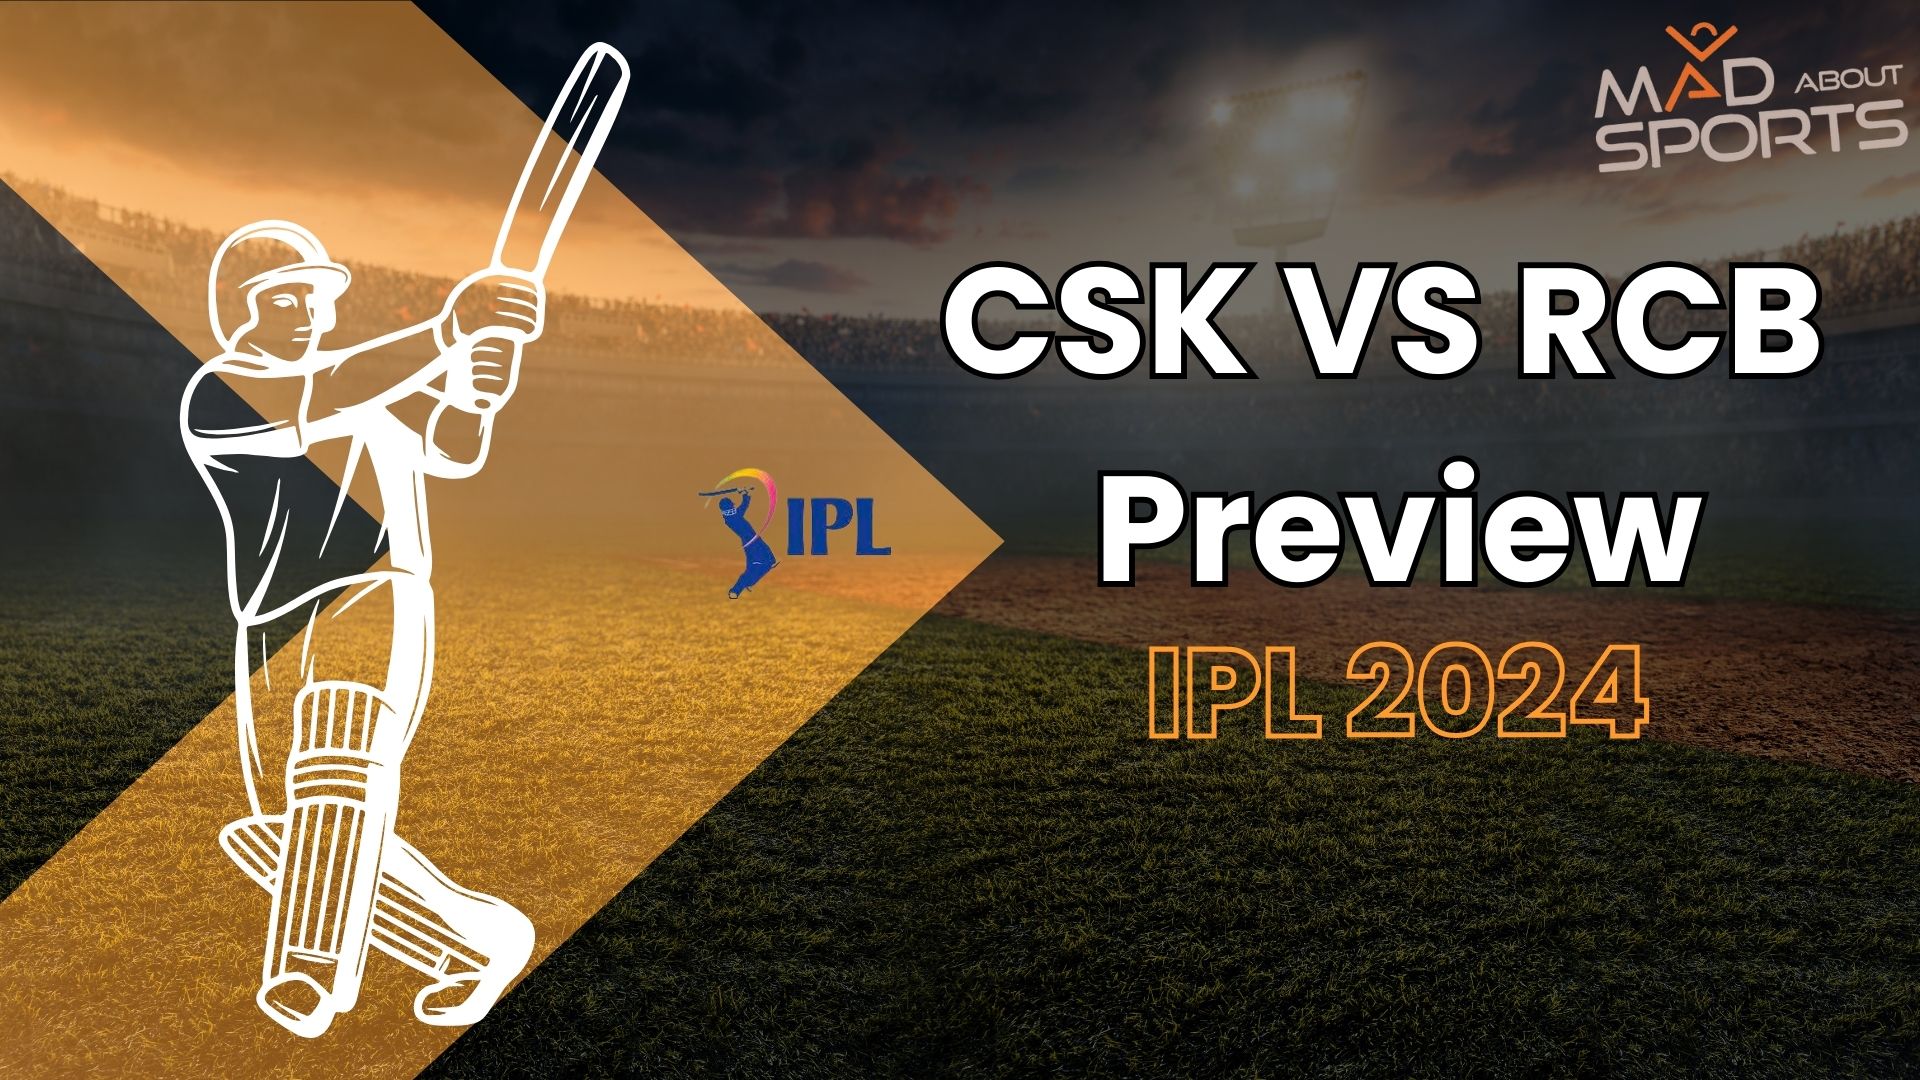 CSK VS RCB PREVIEW IPL 2024